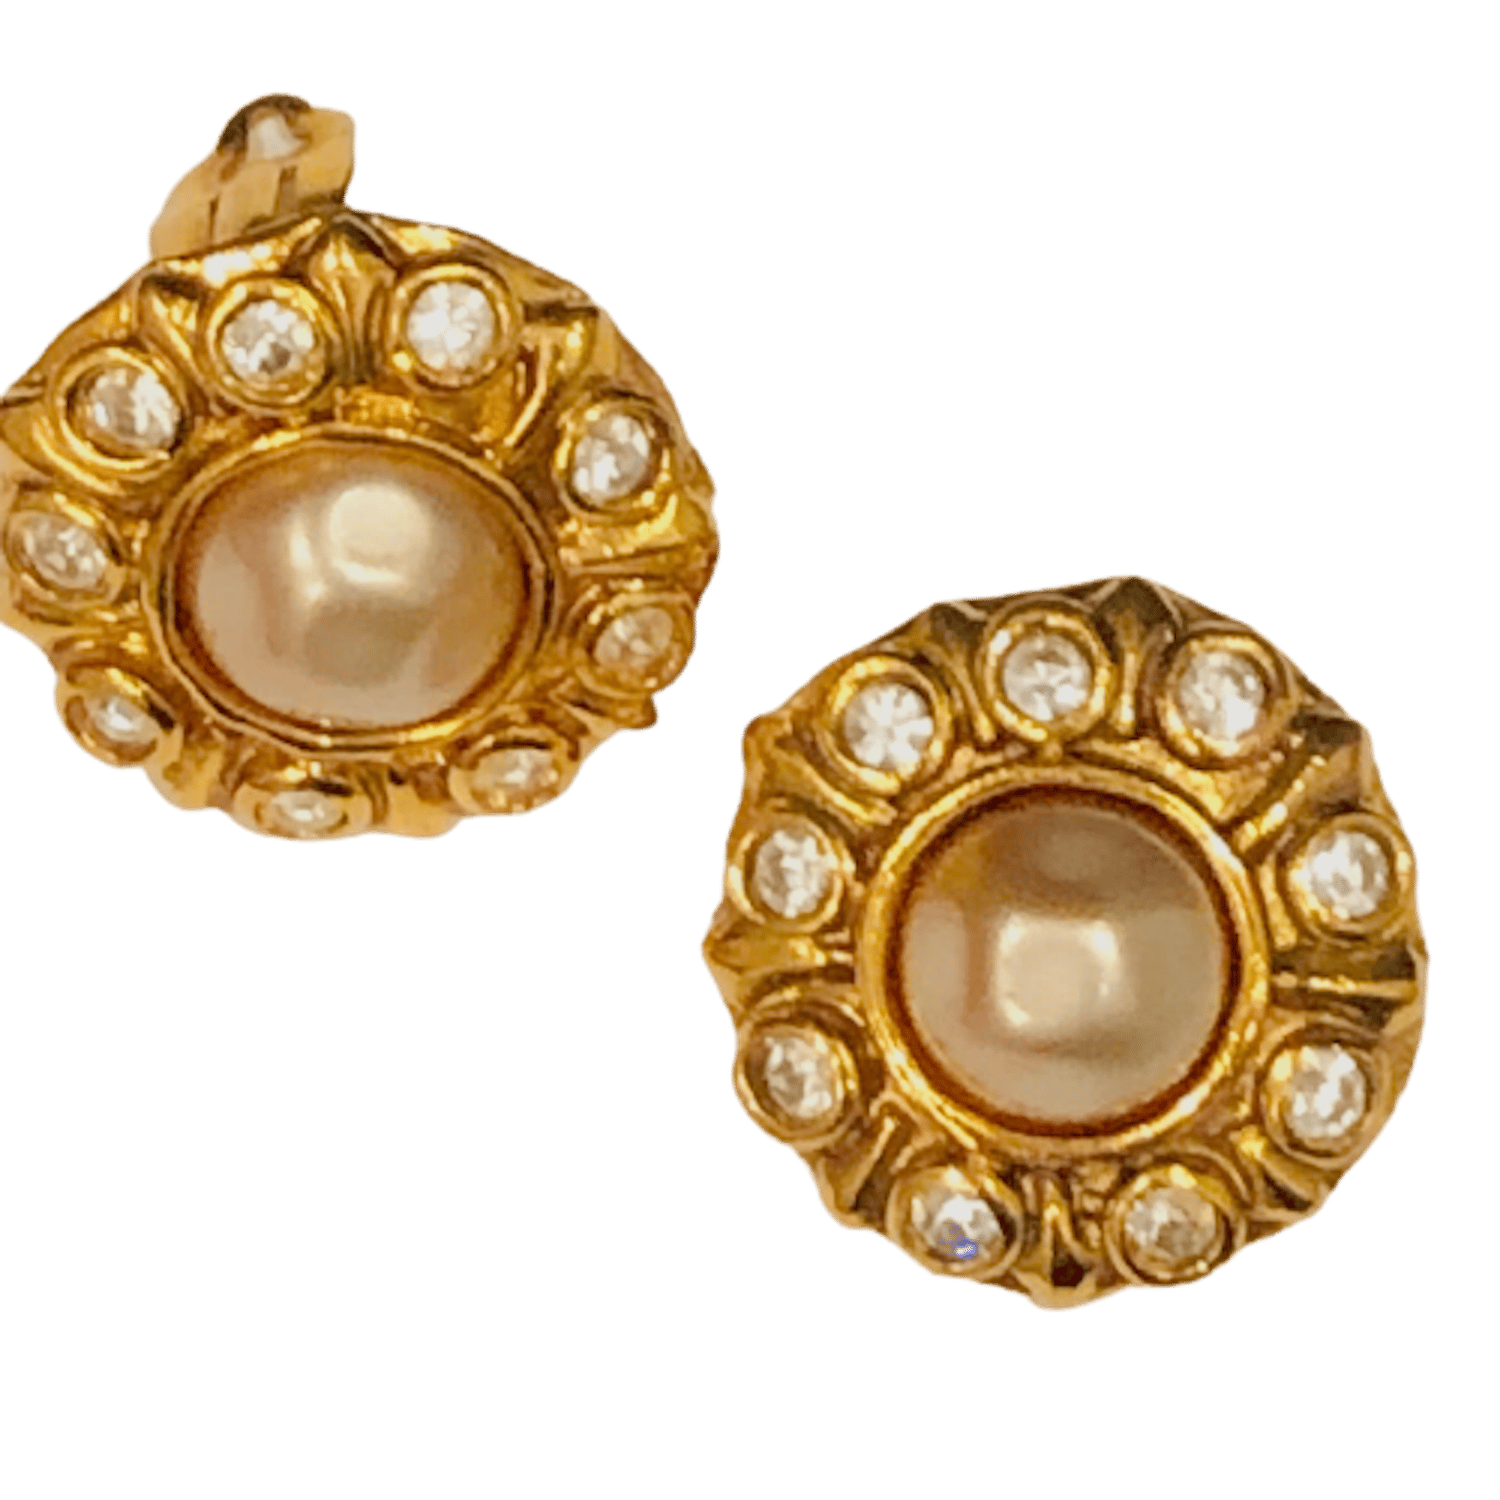 Vintage Louis Feraud Paris Gold Leaf Stud Earrings French 